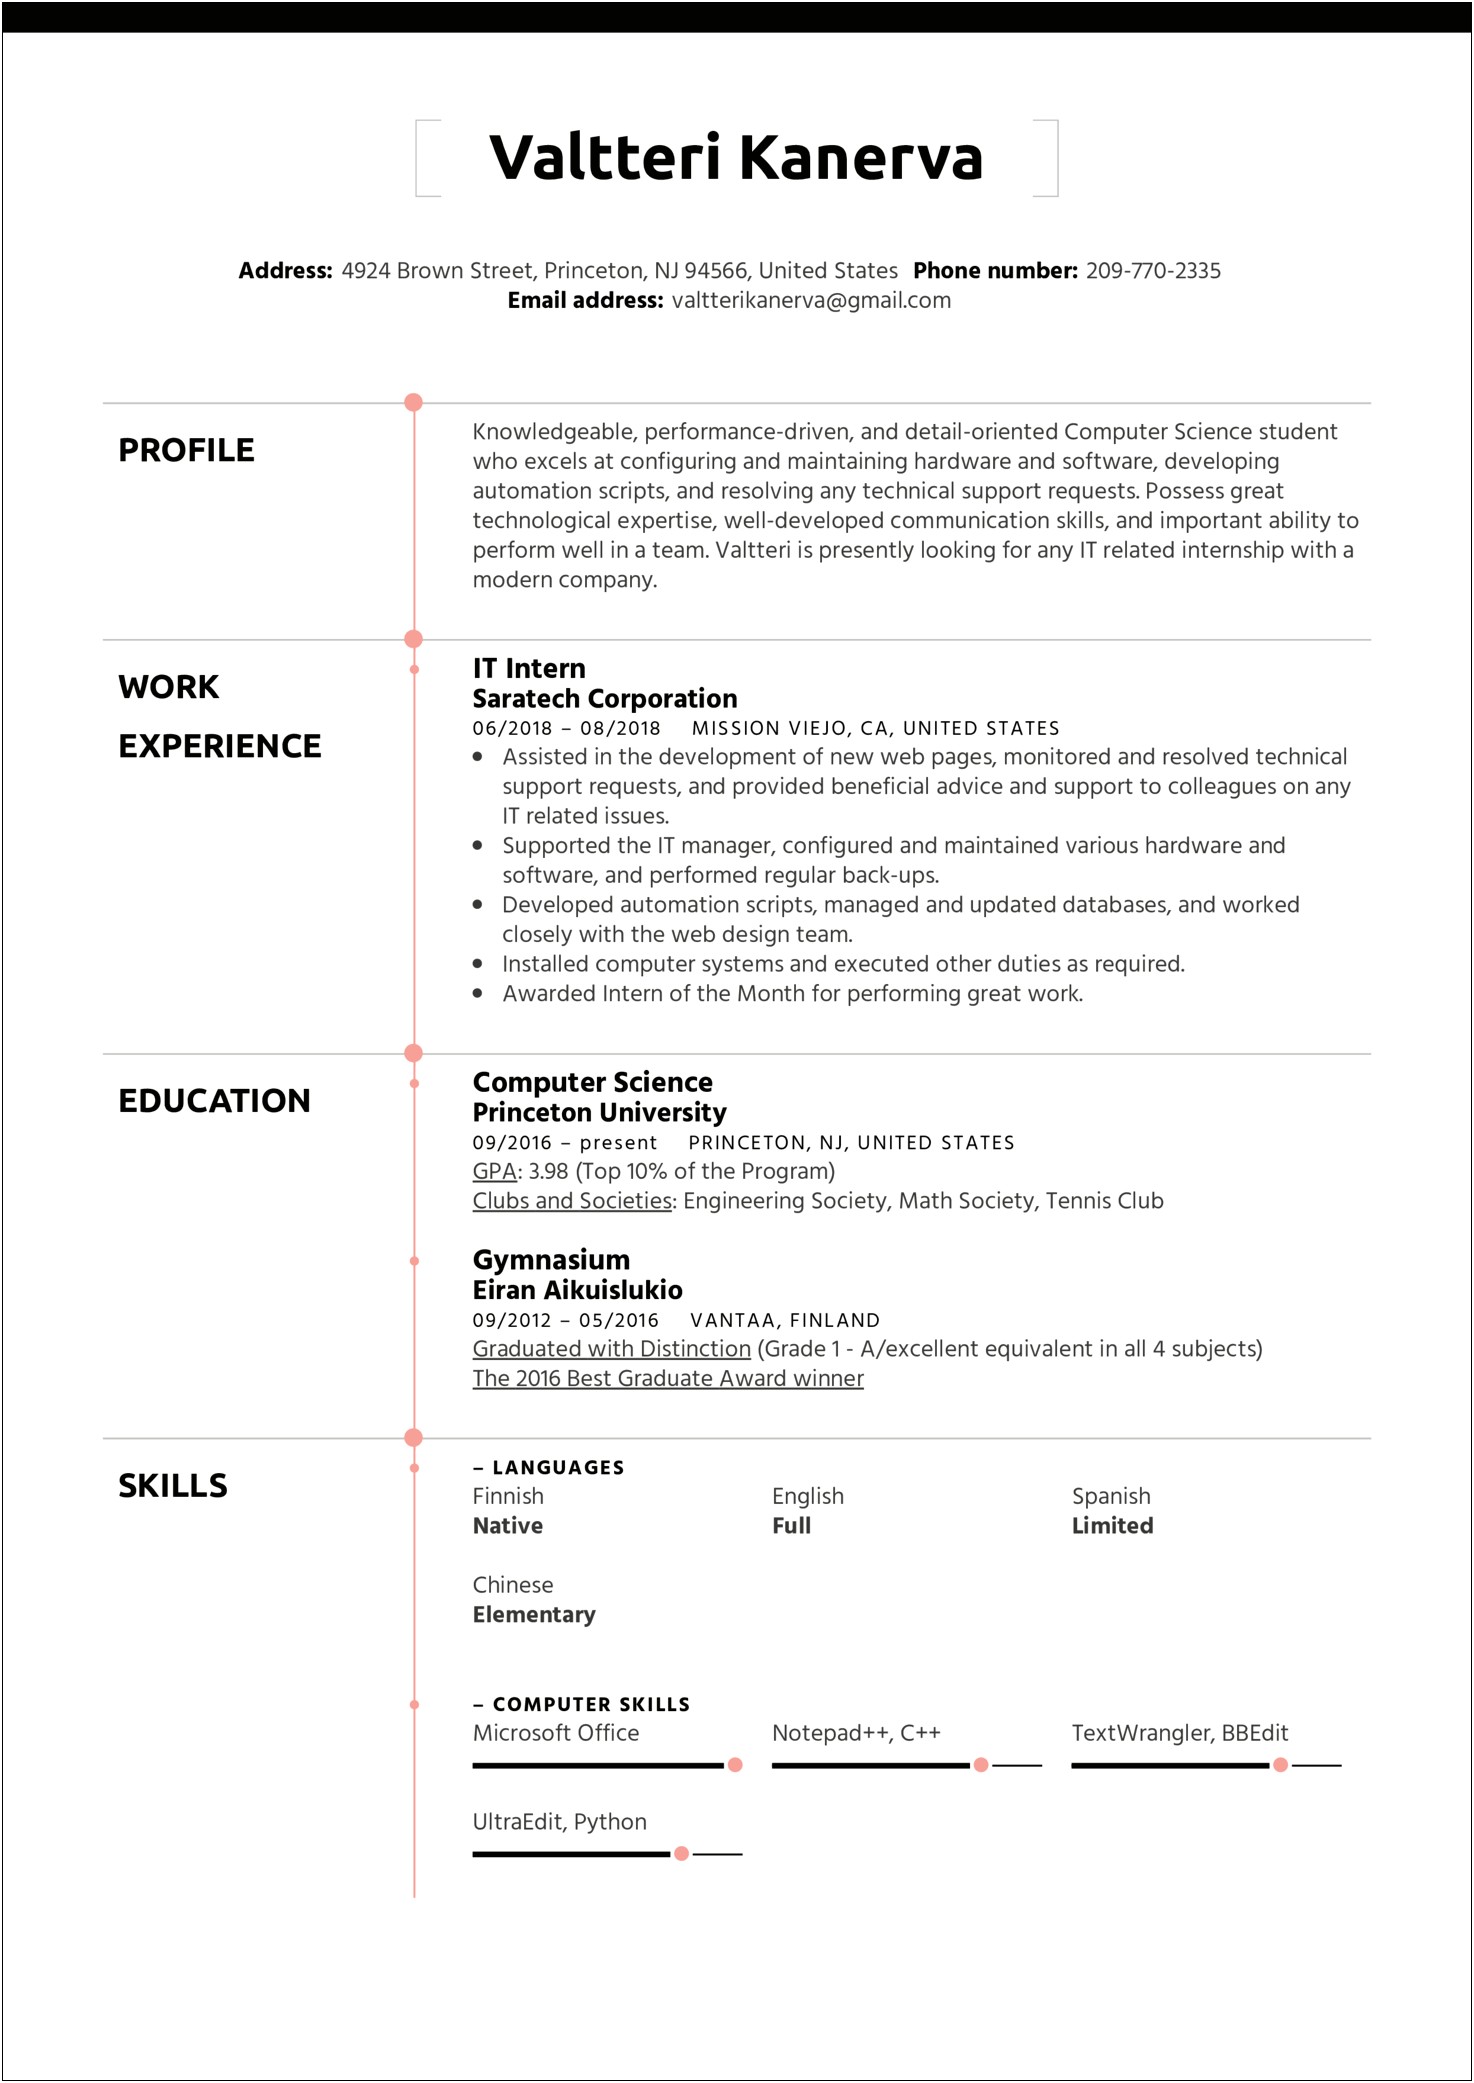 Internship Description On Resume Working In Teams Technology